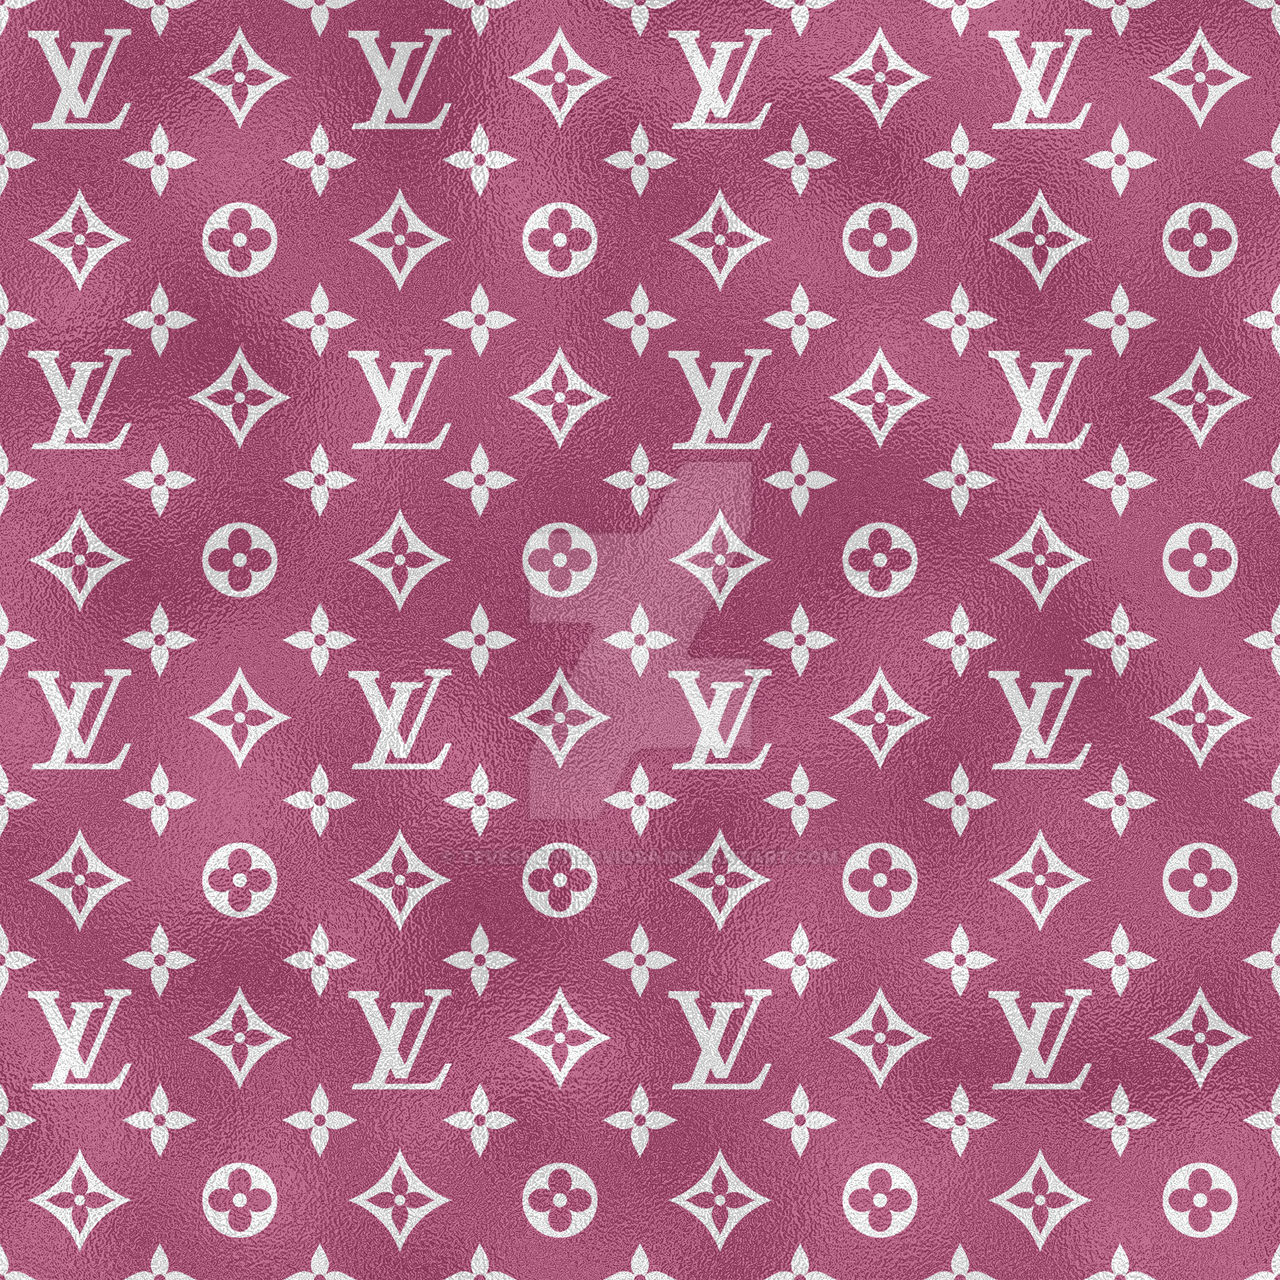 Louis Vuitton Logo PNG by TeVesMuyNerviosa on DeviantArt